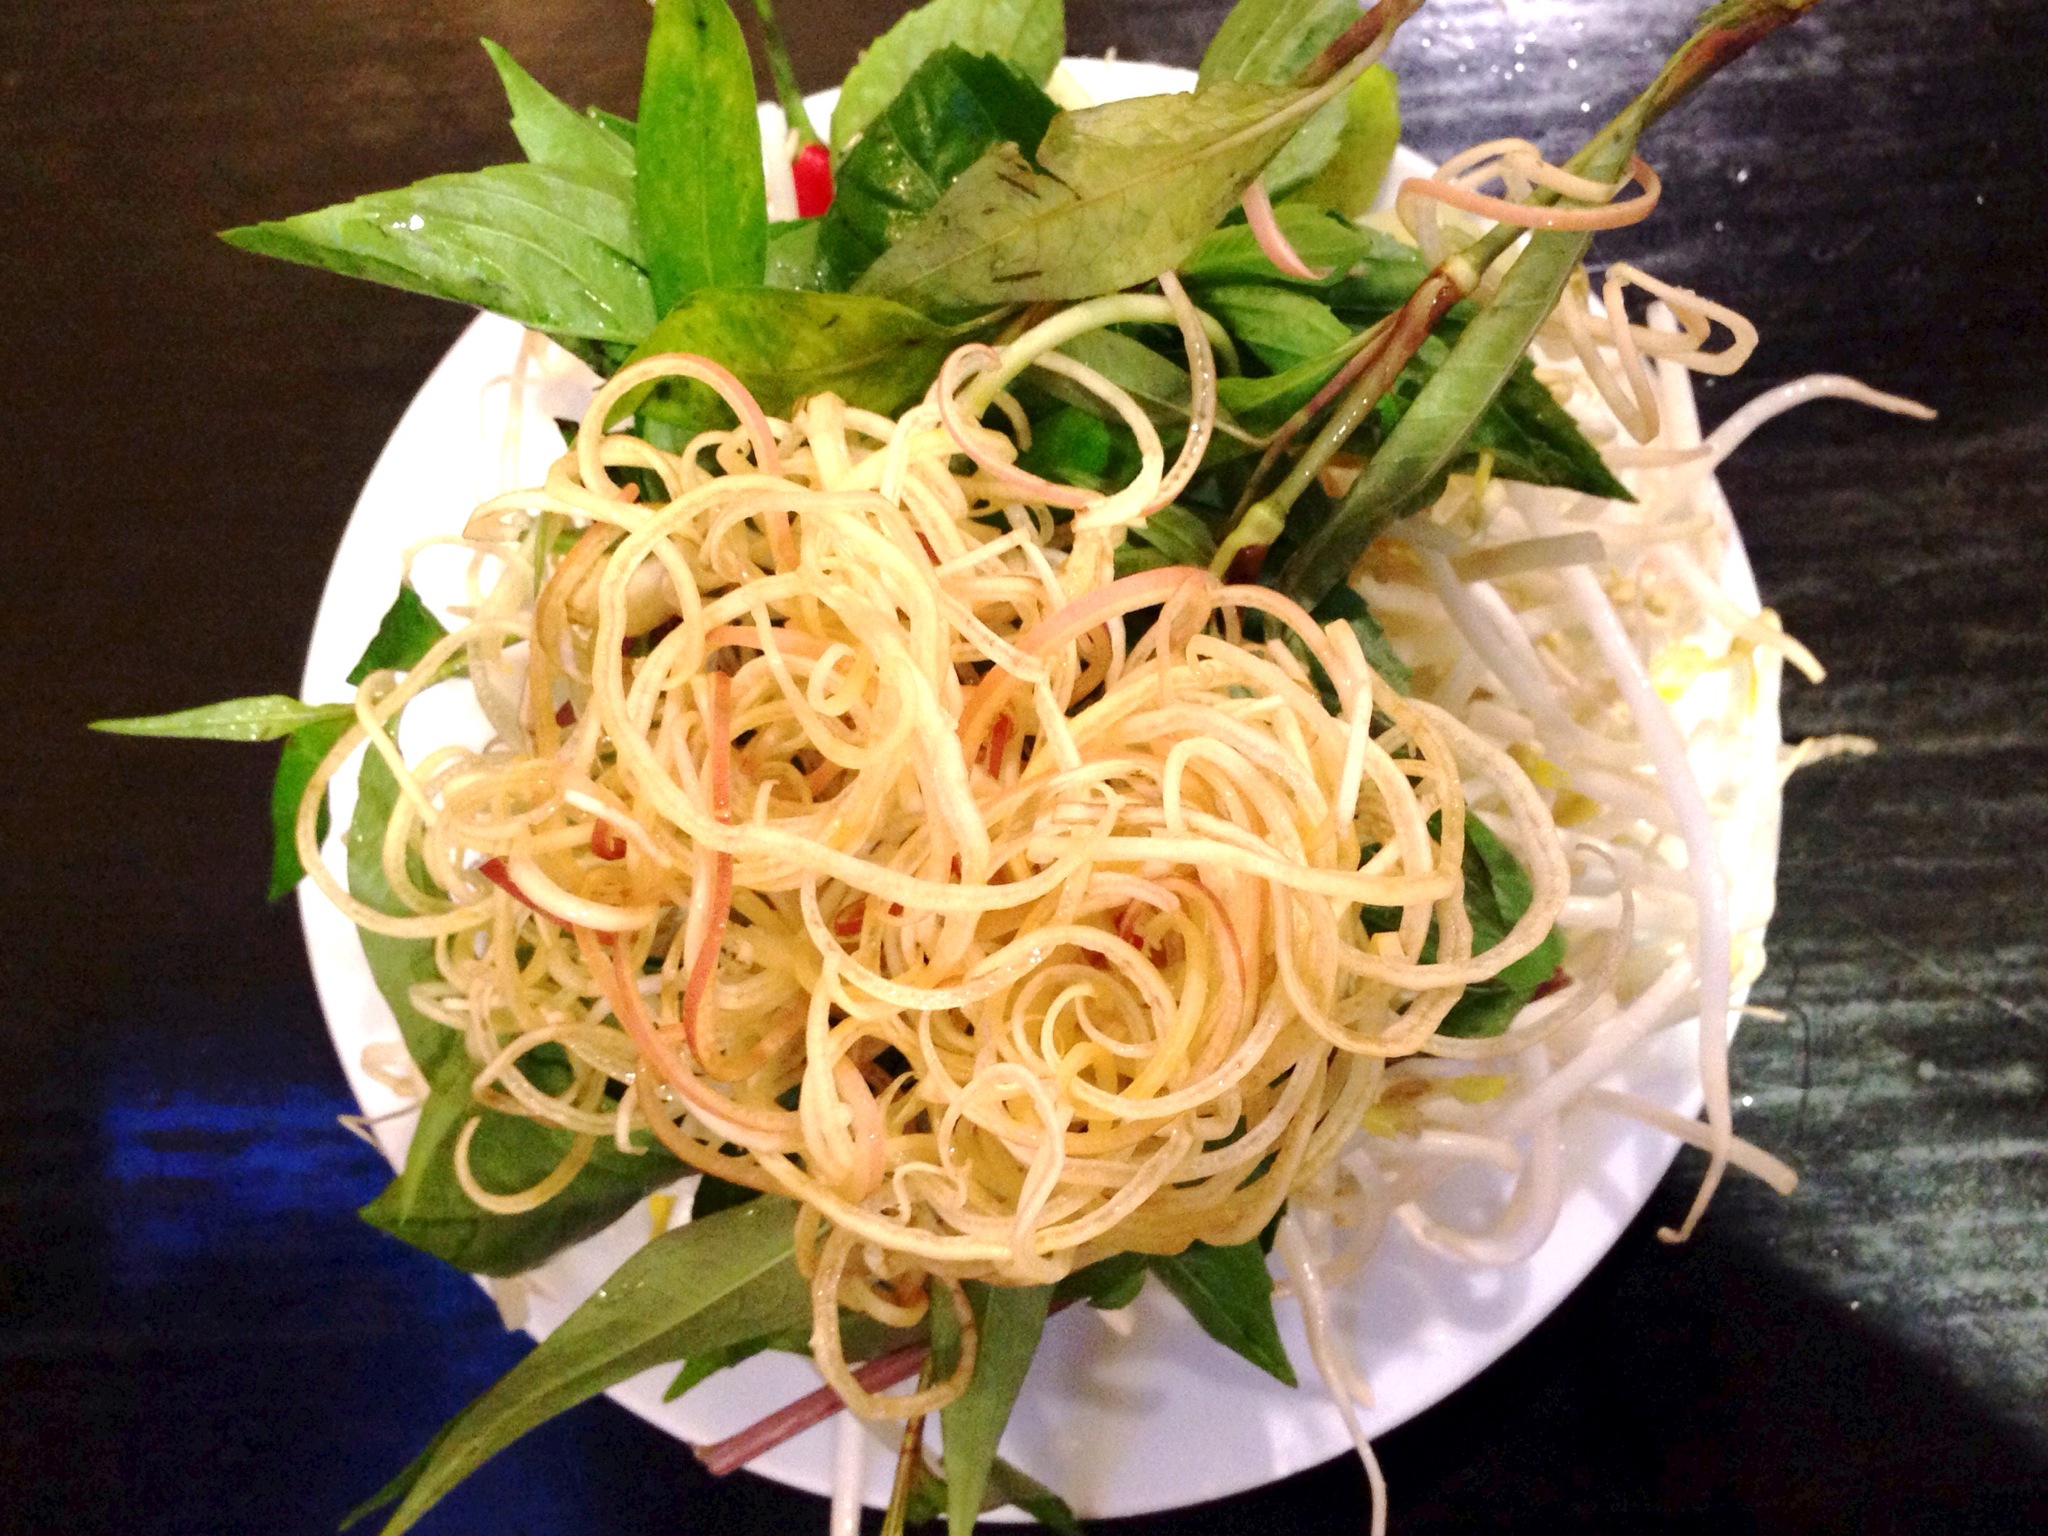 Condiments for Noodle Soup: Banana Blossoms, Vietnamese Coriander, Basil, Bean Sprouts